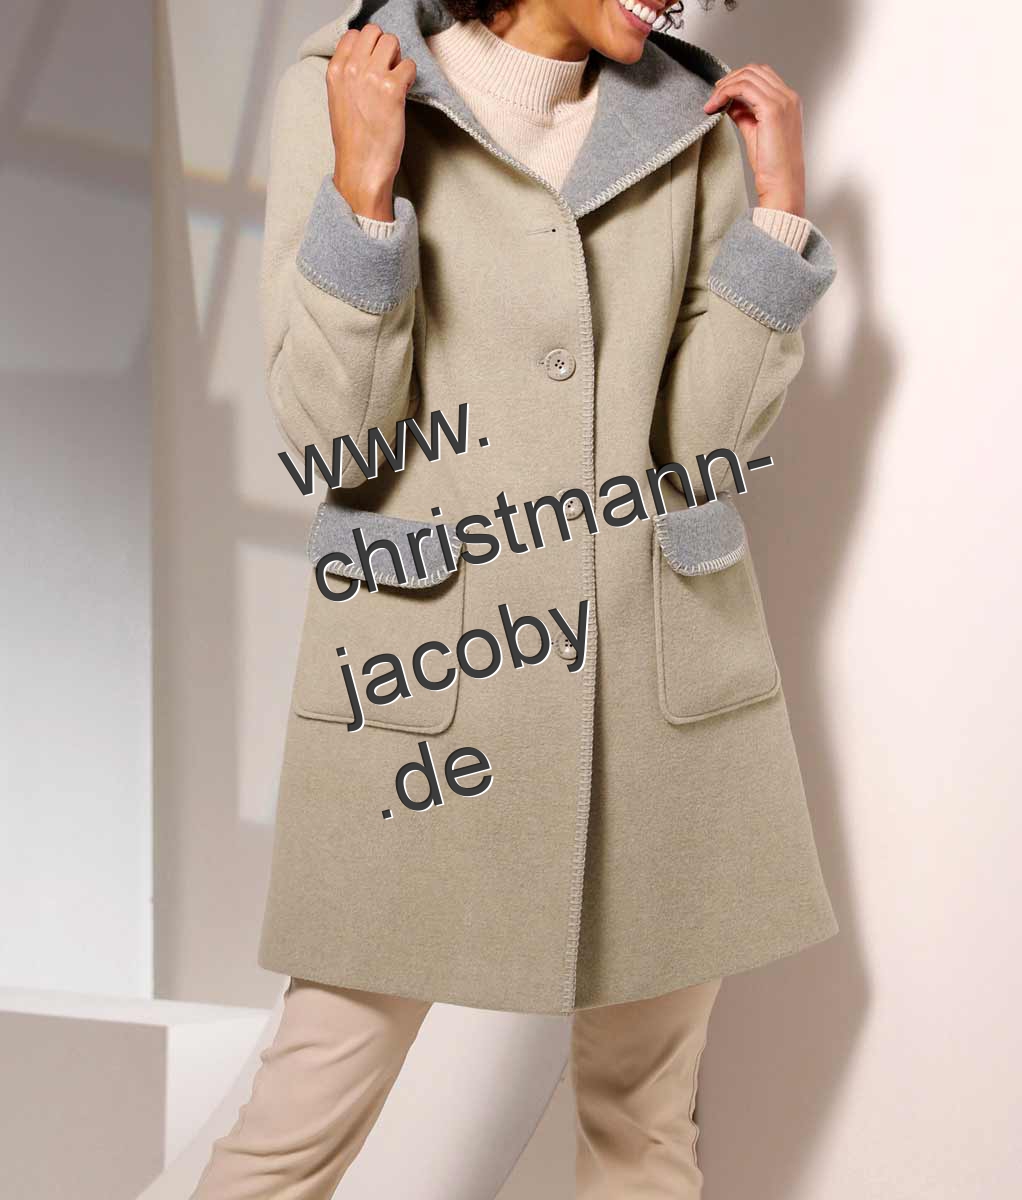 christmann-jacoby-mode-grosshandel-blazer-jacken-maentel